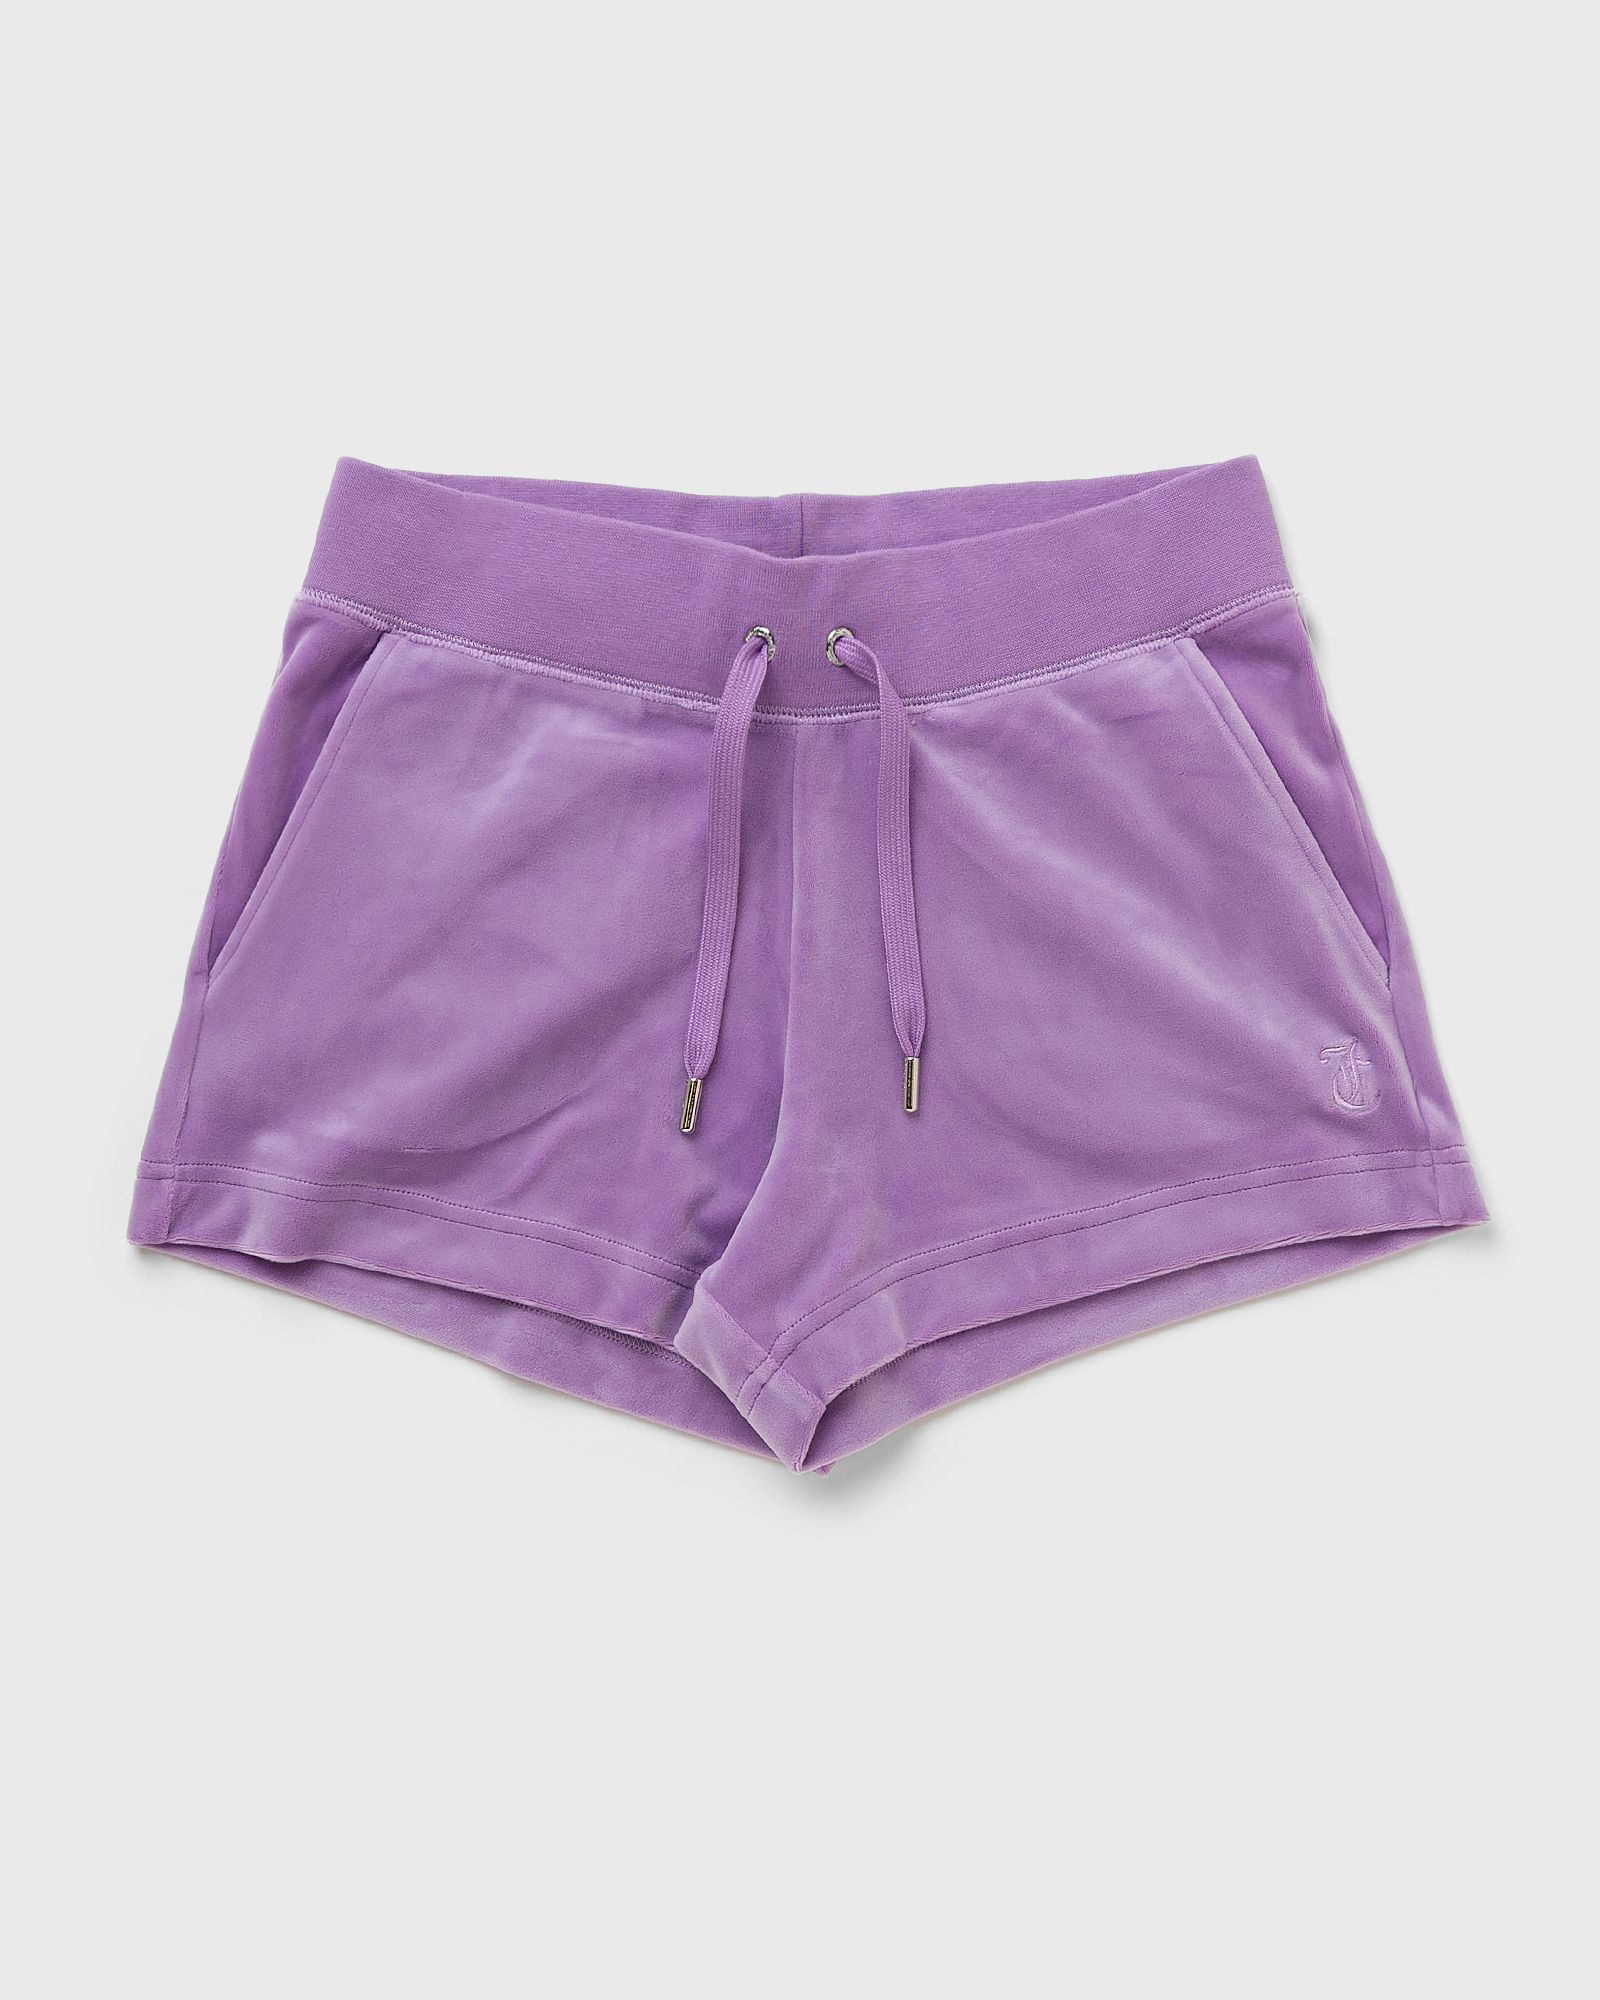 Juicy Couture - wmns classic velour track shorts women sport & team shorts purple in größe:l